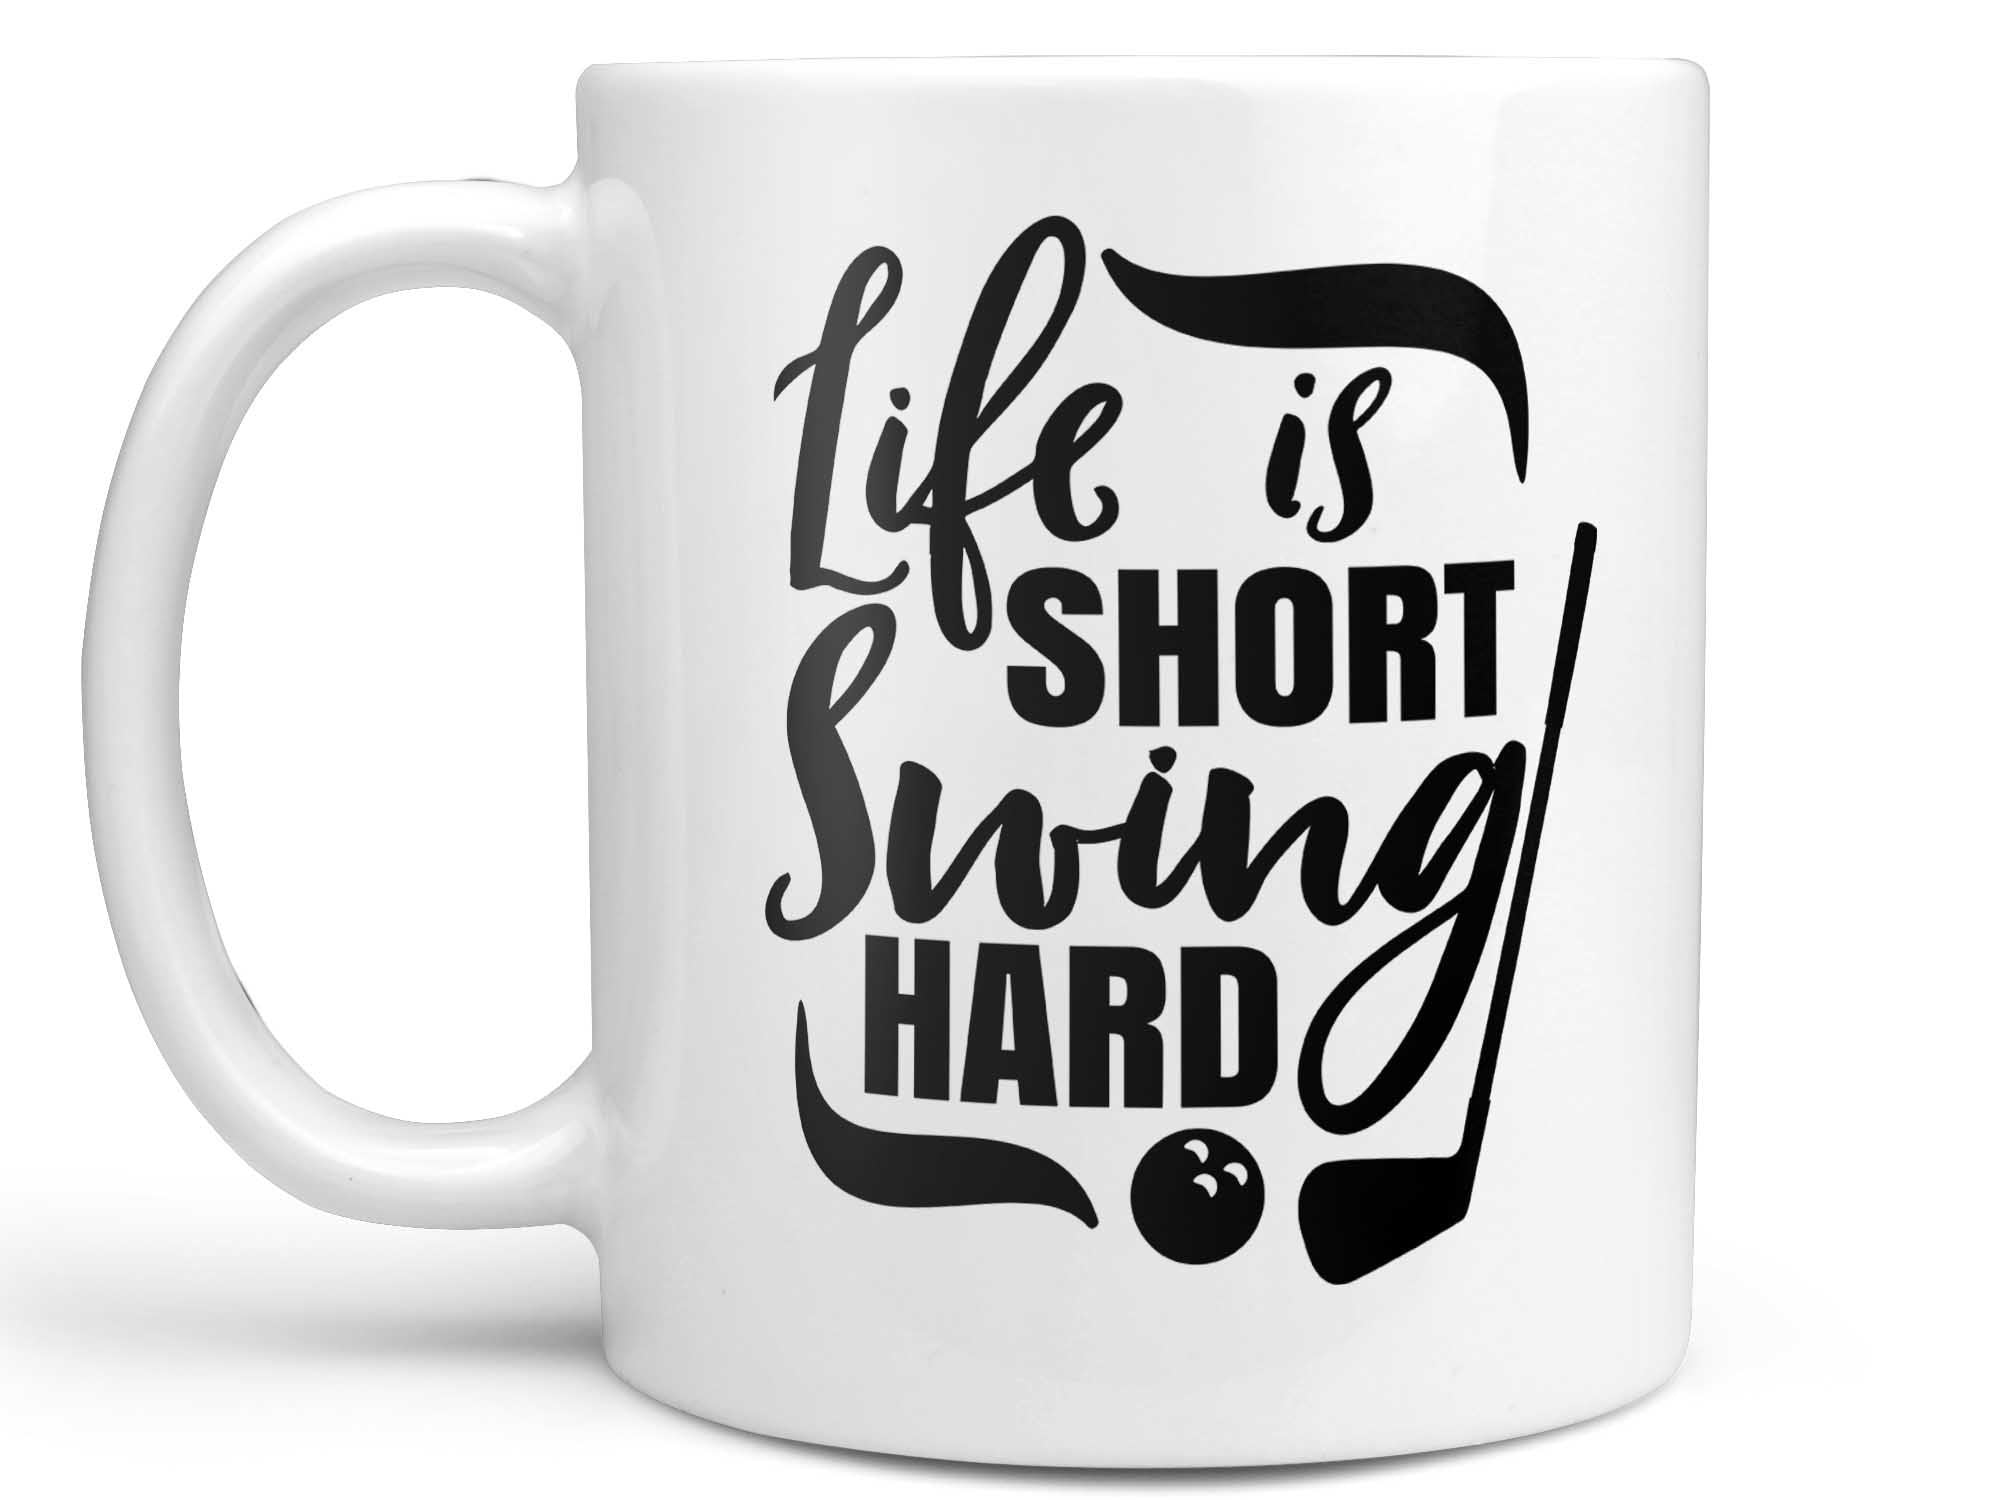 Swing Hard Golf Coffee Mug,Coffee Mugs Never Lie,Coffee Mug